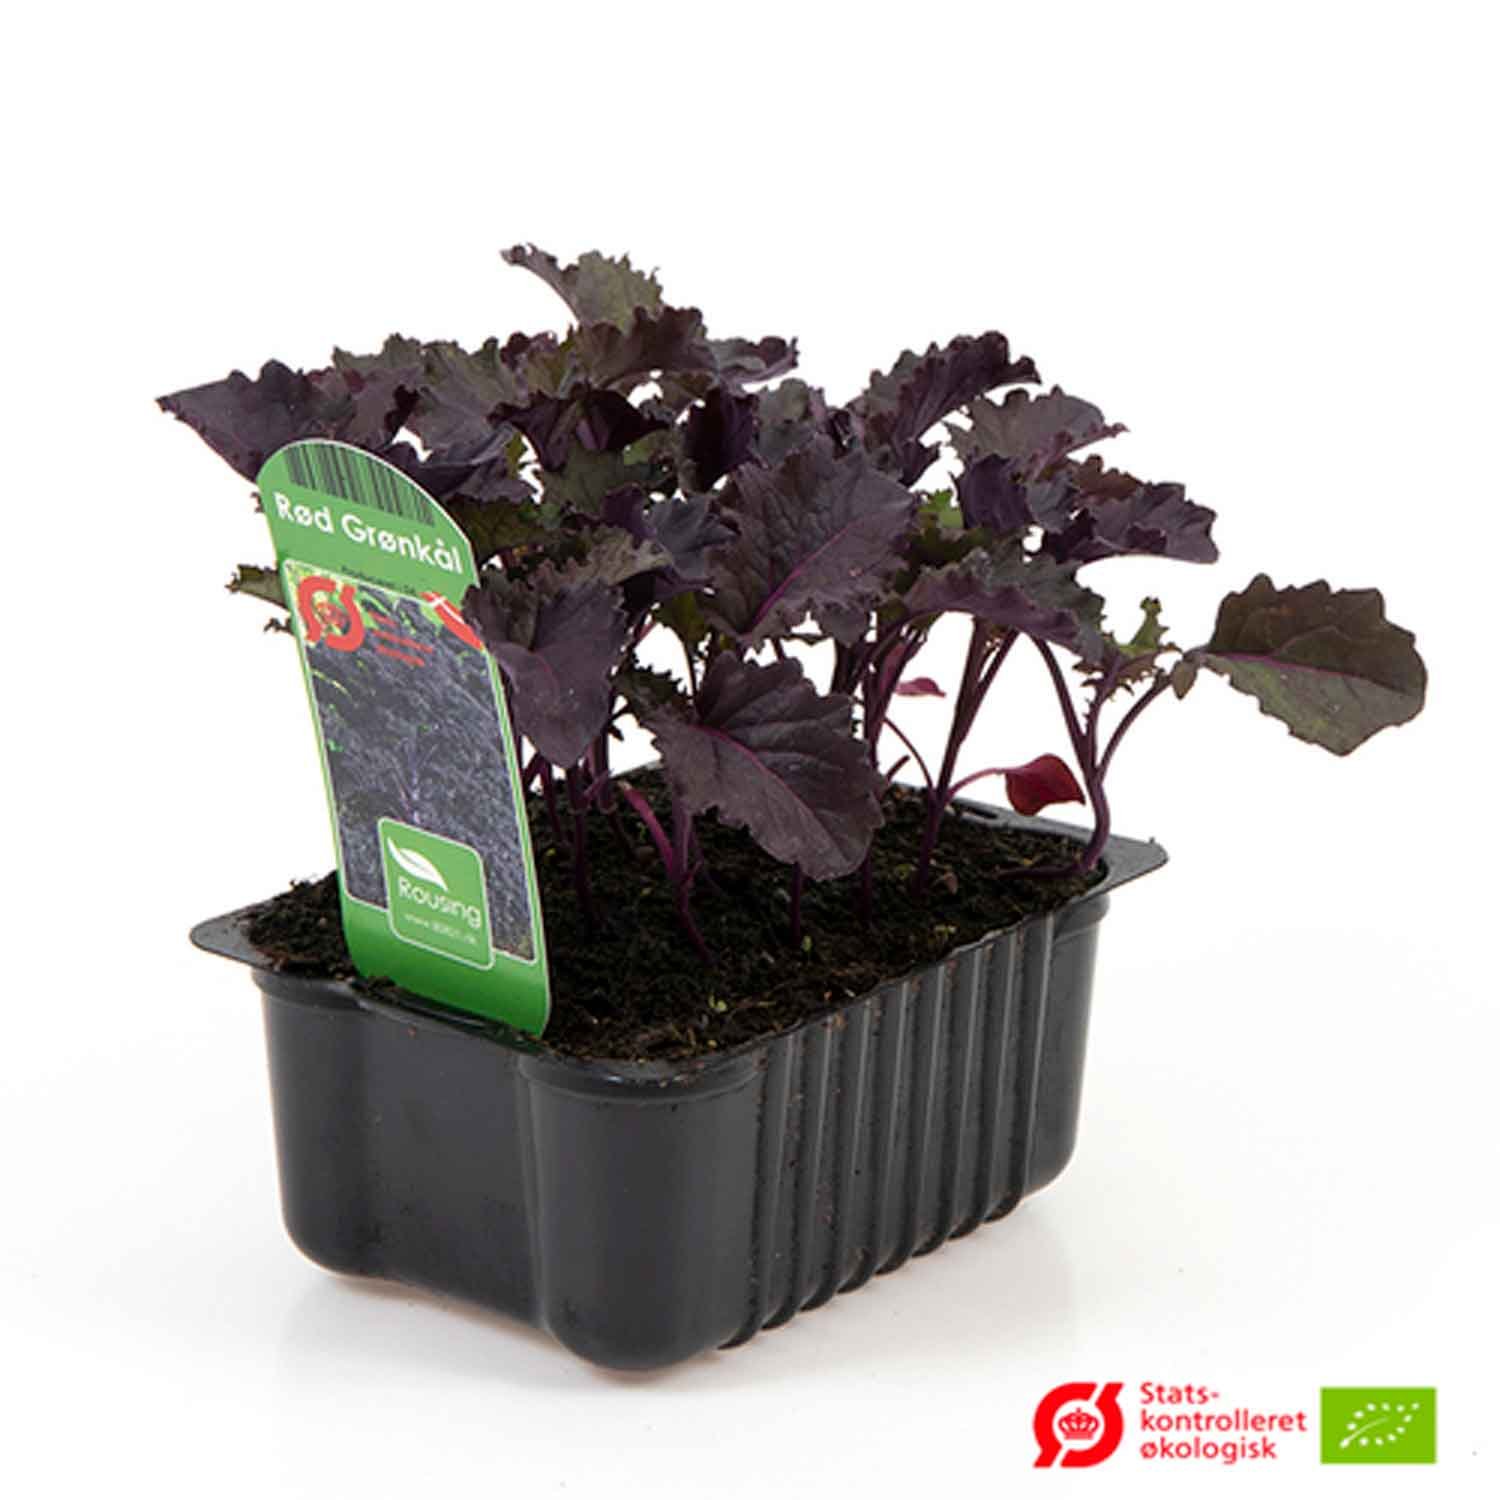 Rød Grønkål - Brassica oleracea Rød i box